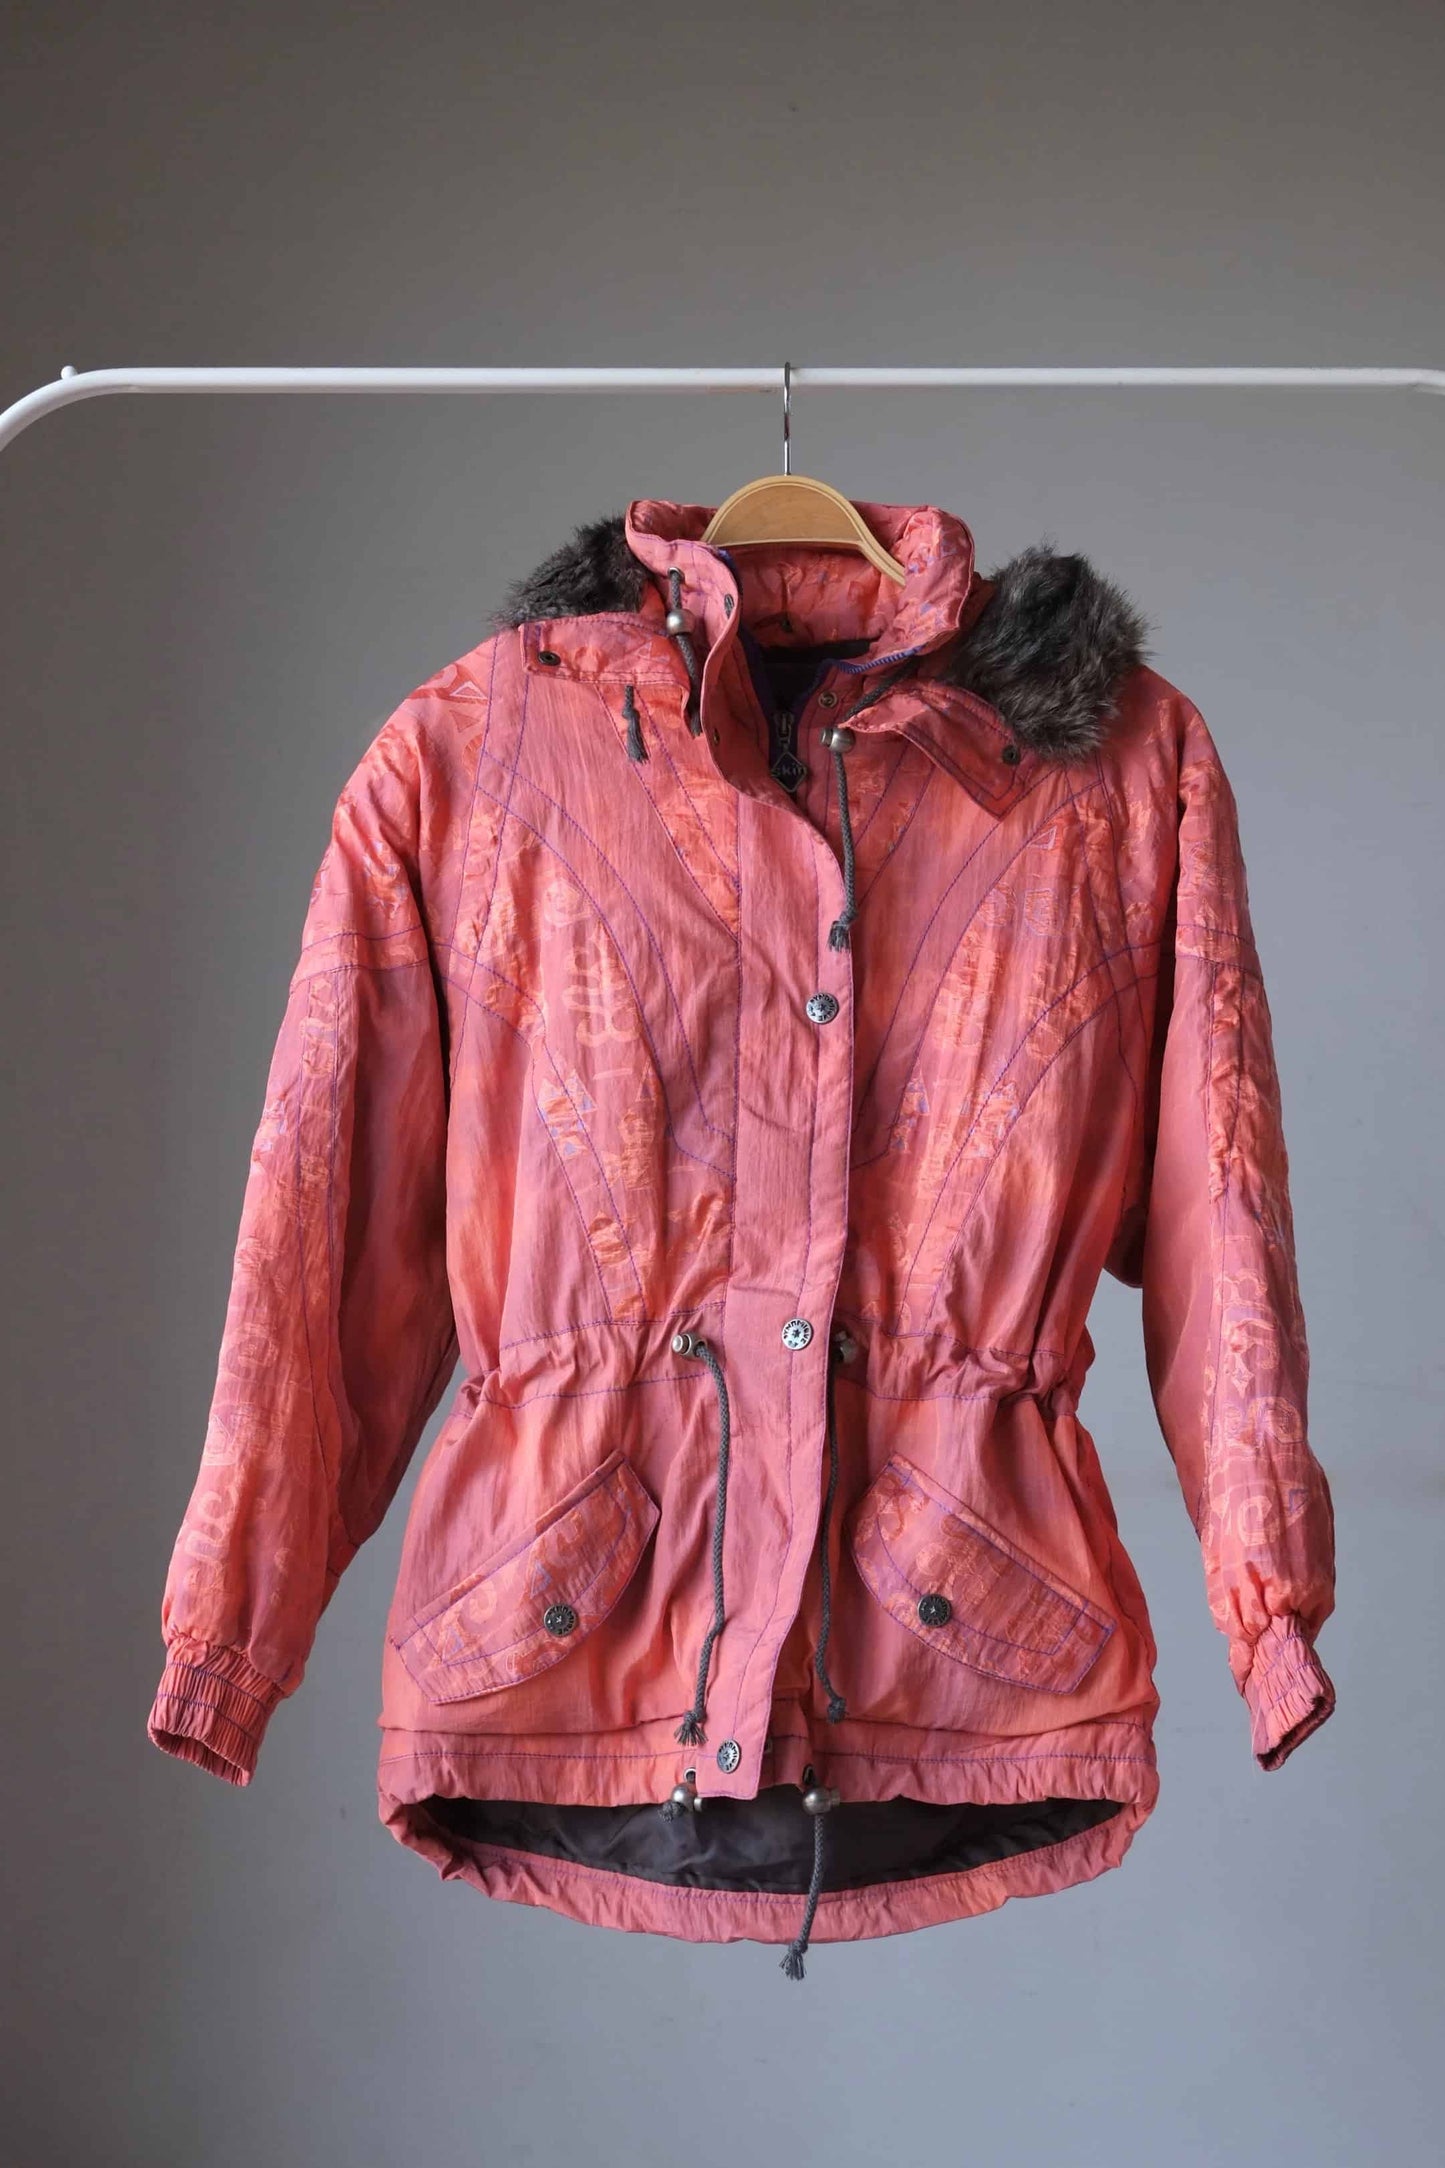 Vintage 90's Women's Ski Jacket coral